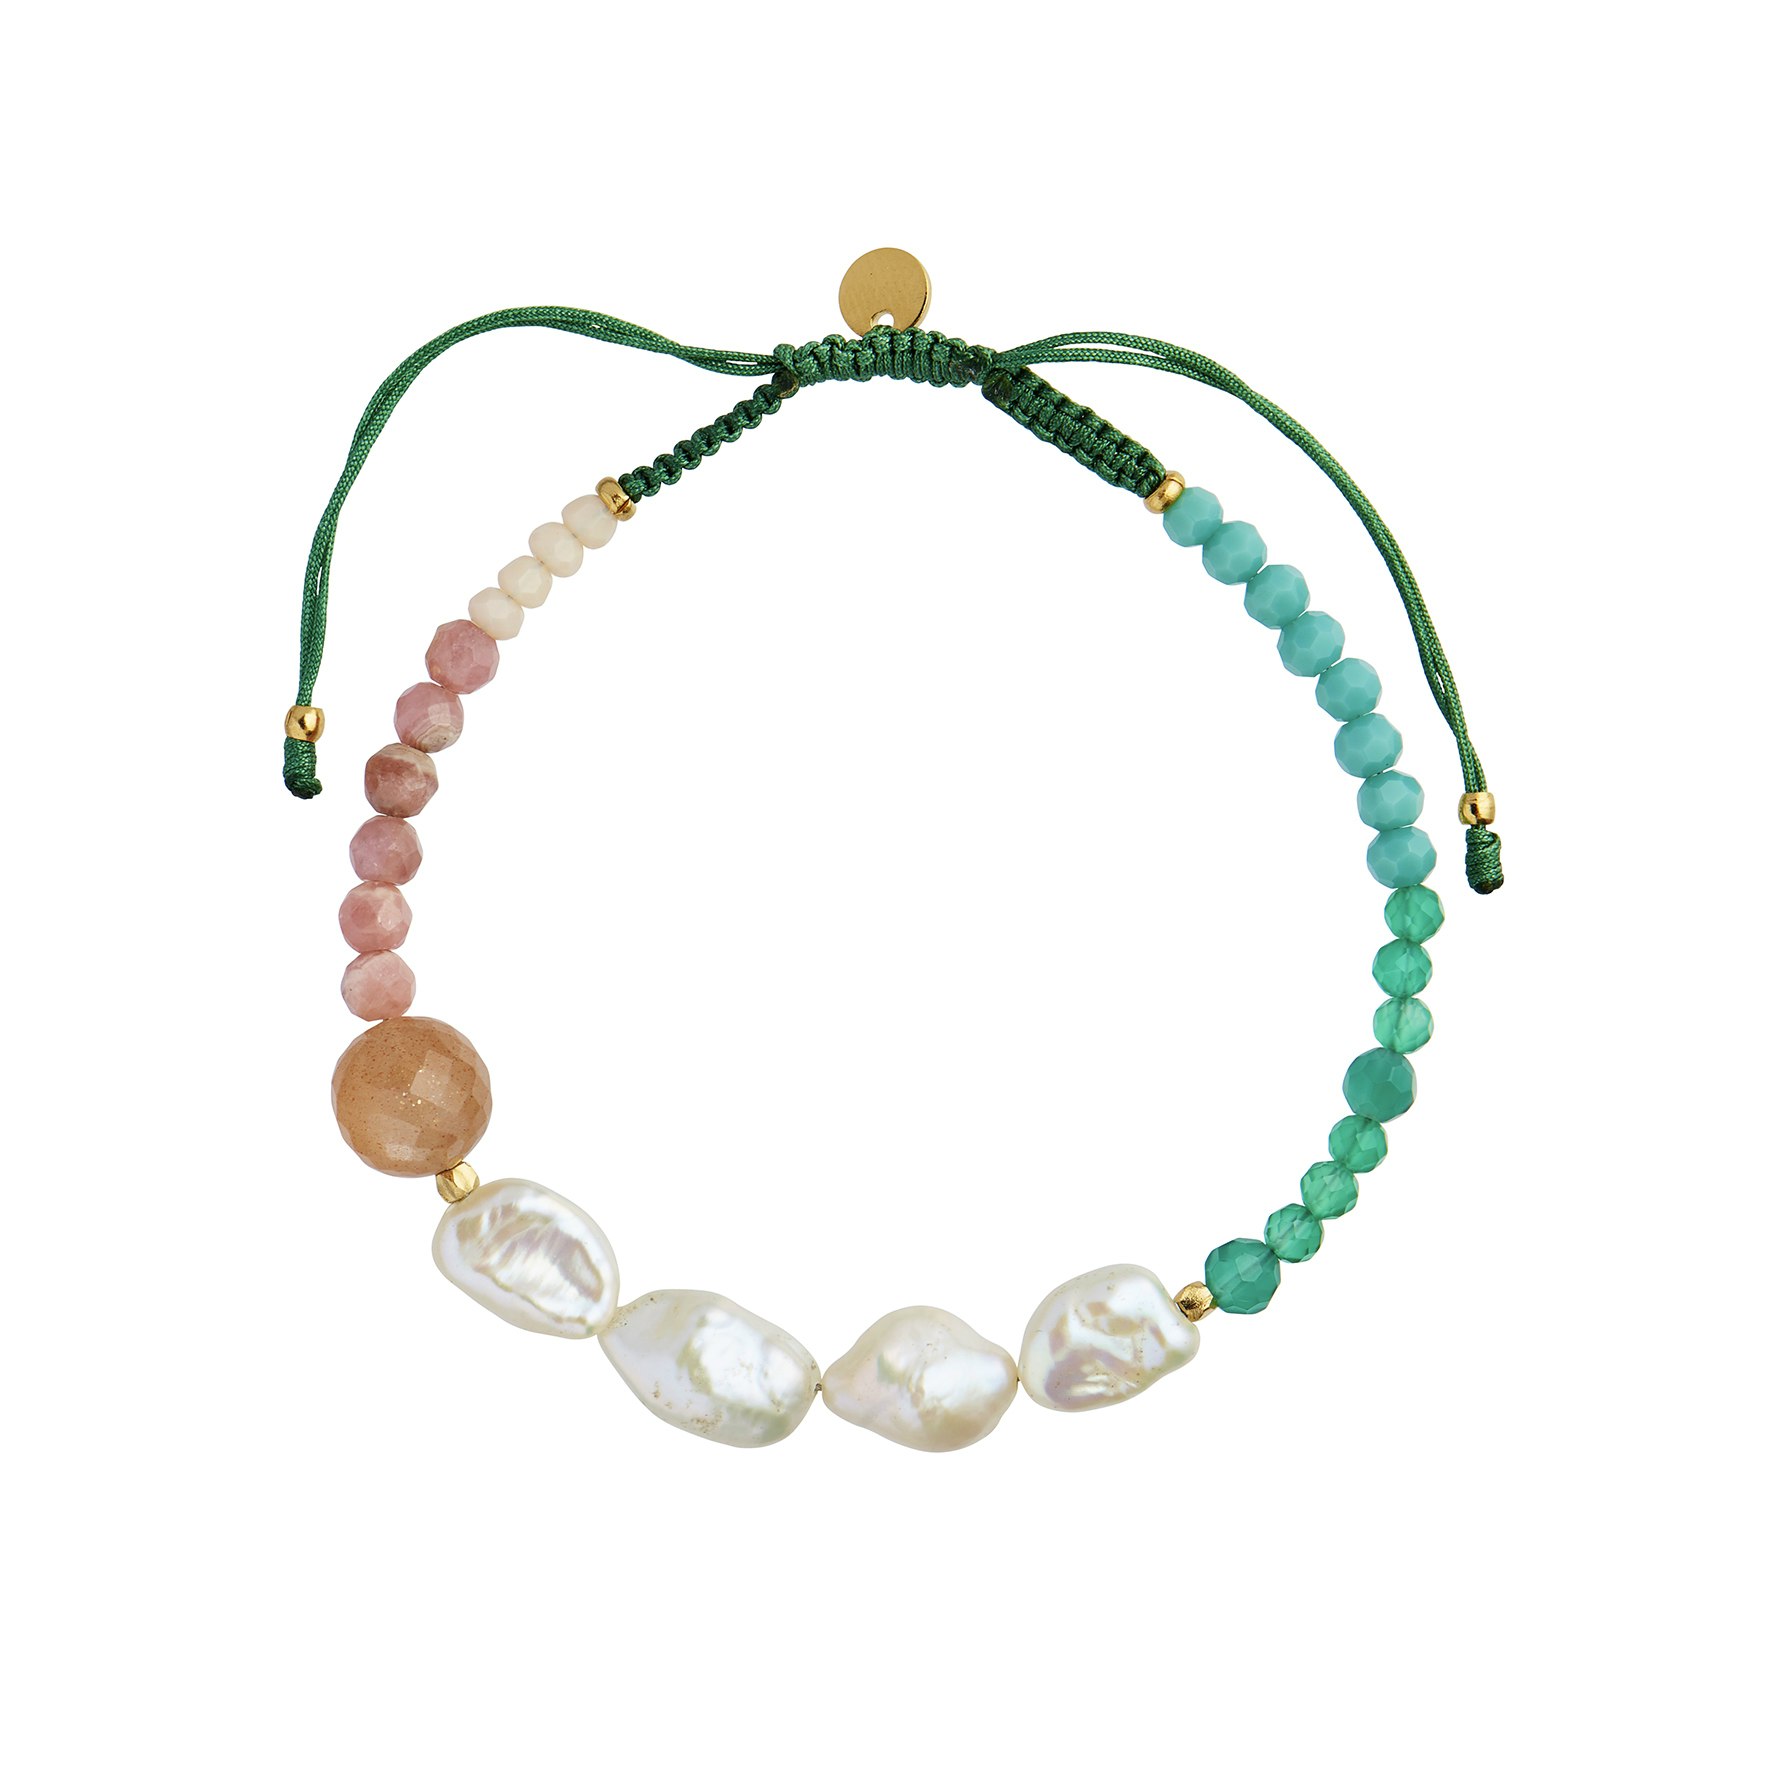 Powder Fall Bracelet With Stones And Pearls Pine Green Ribbon från STINE A Jewelry i Nylon